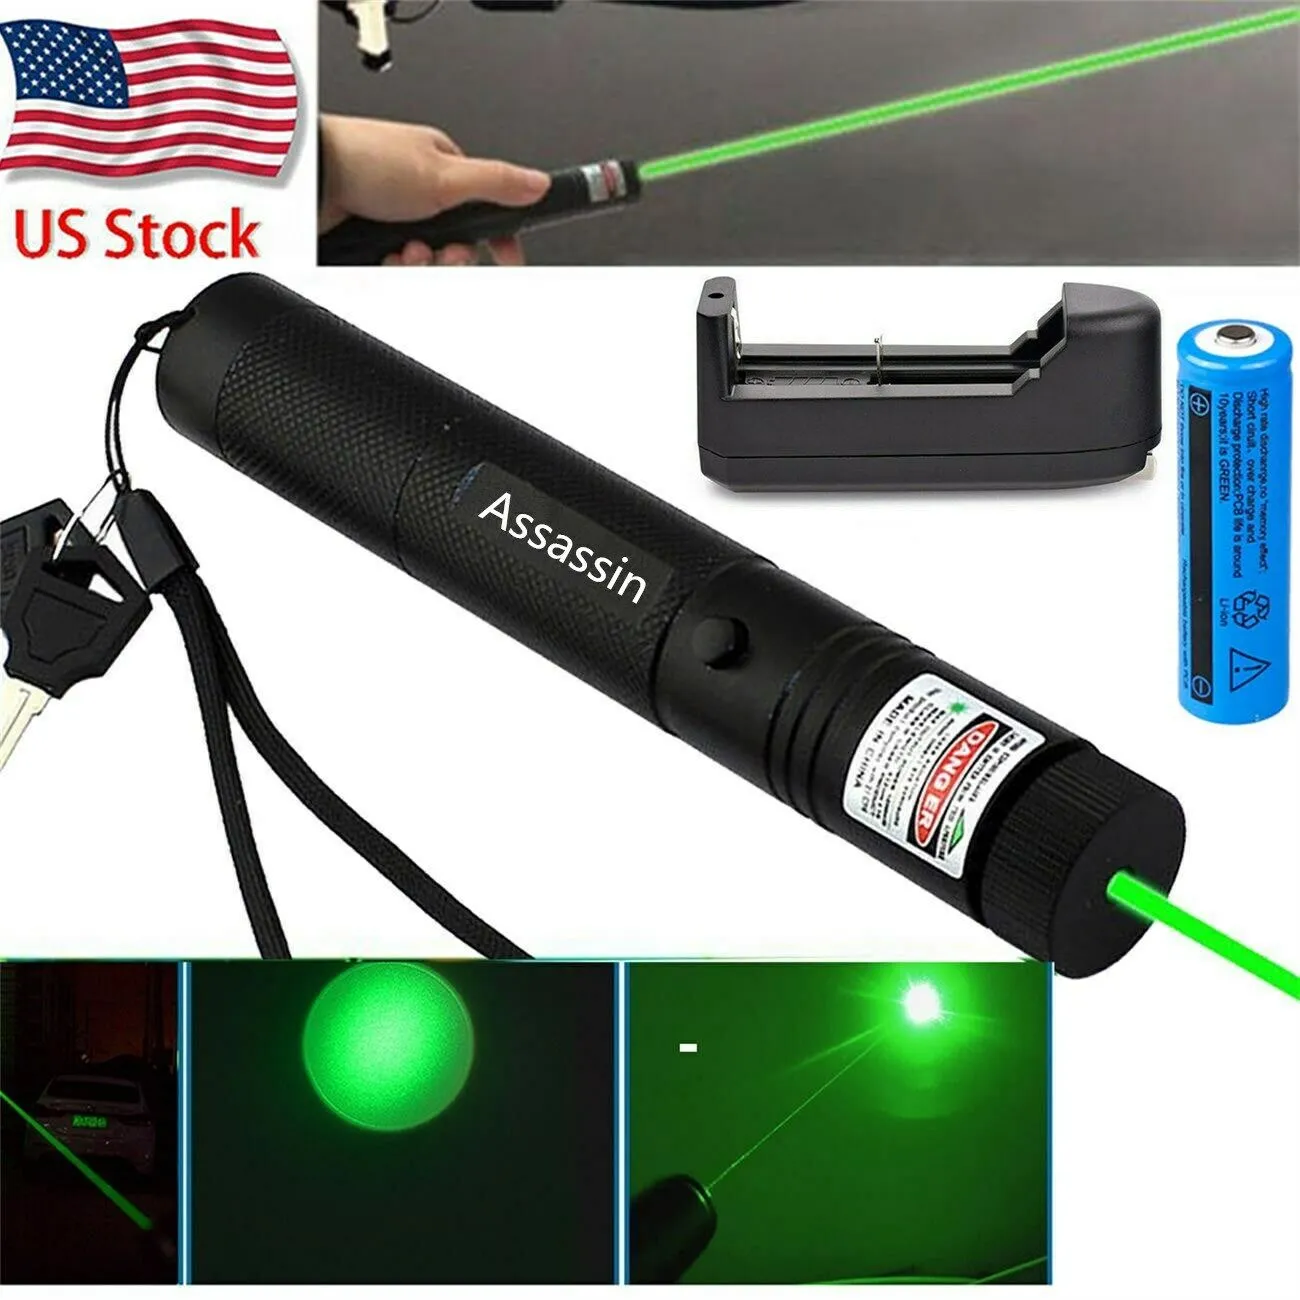 Astronomia Nauczanie Focus Furning Potężne Green Laser Pen Pointer 1MW 532nm Visible Beam Cat Toy Military Green Laser + 18650 Bateria + ładowarka